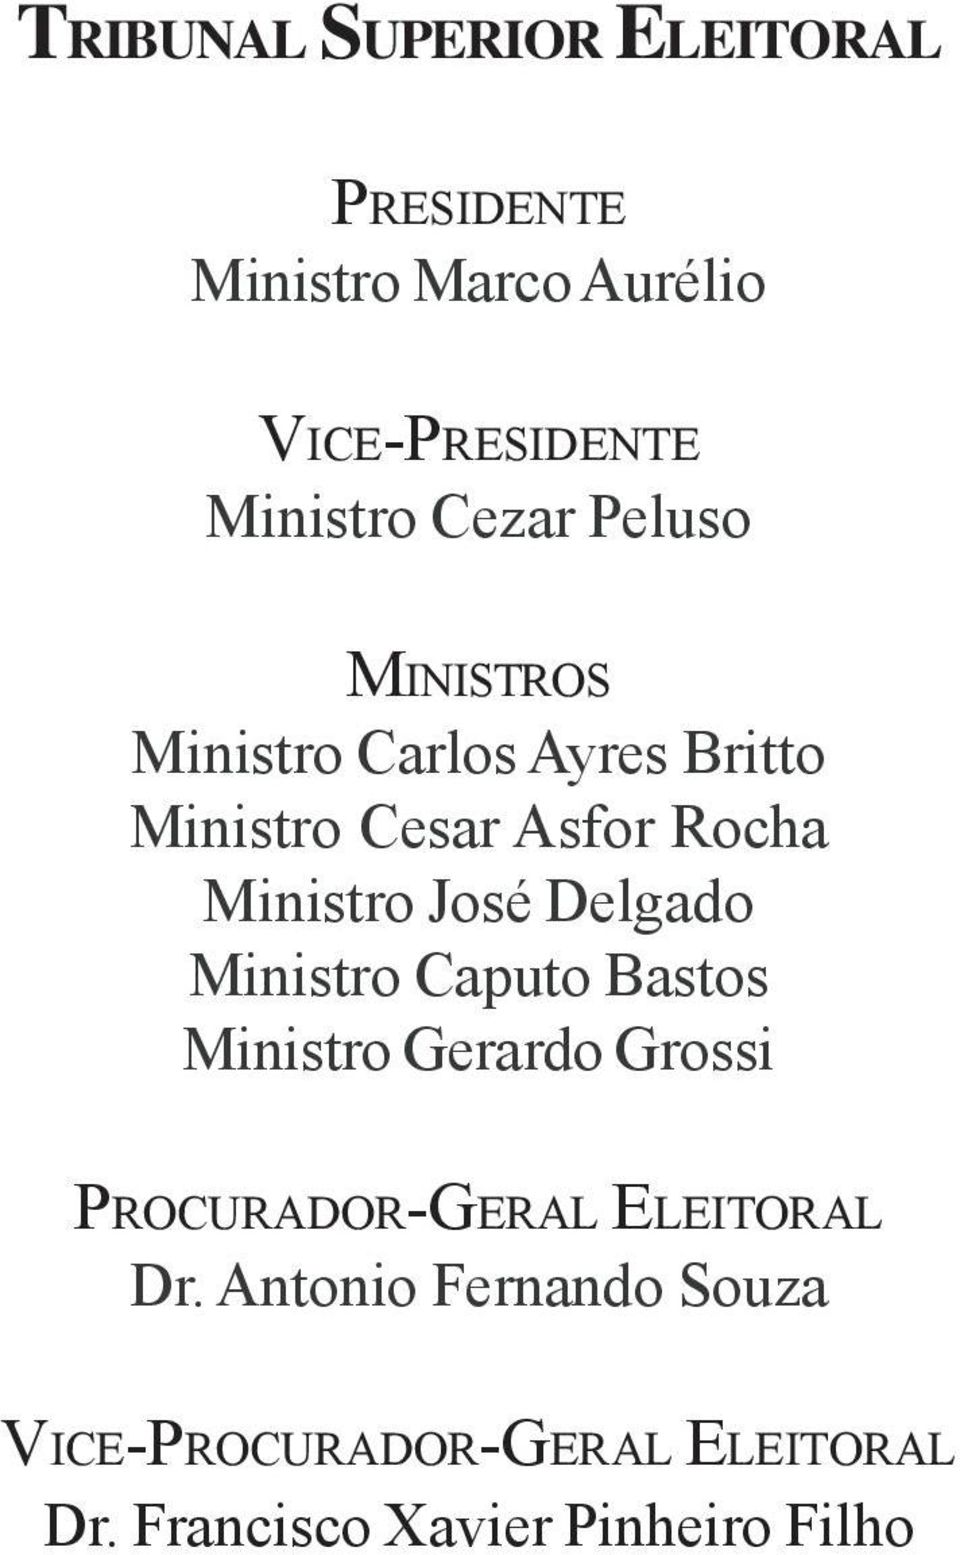 José Delgado Ministro Caputo Bastos Ministro Gerardo Grossi PROCURADOR-GERAL ELEITORAL